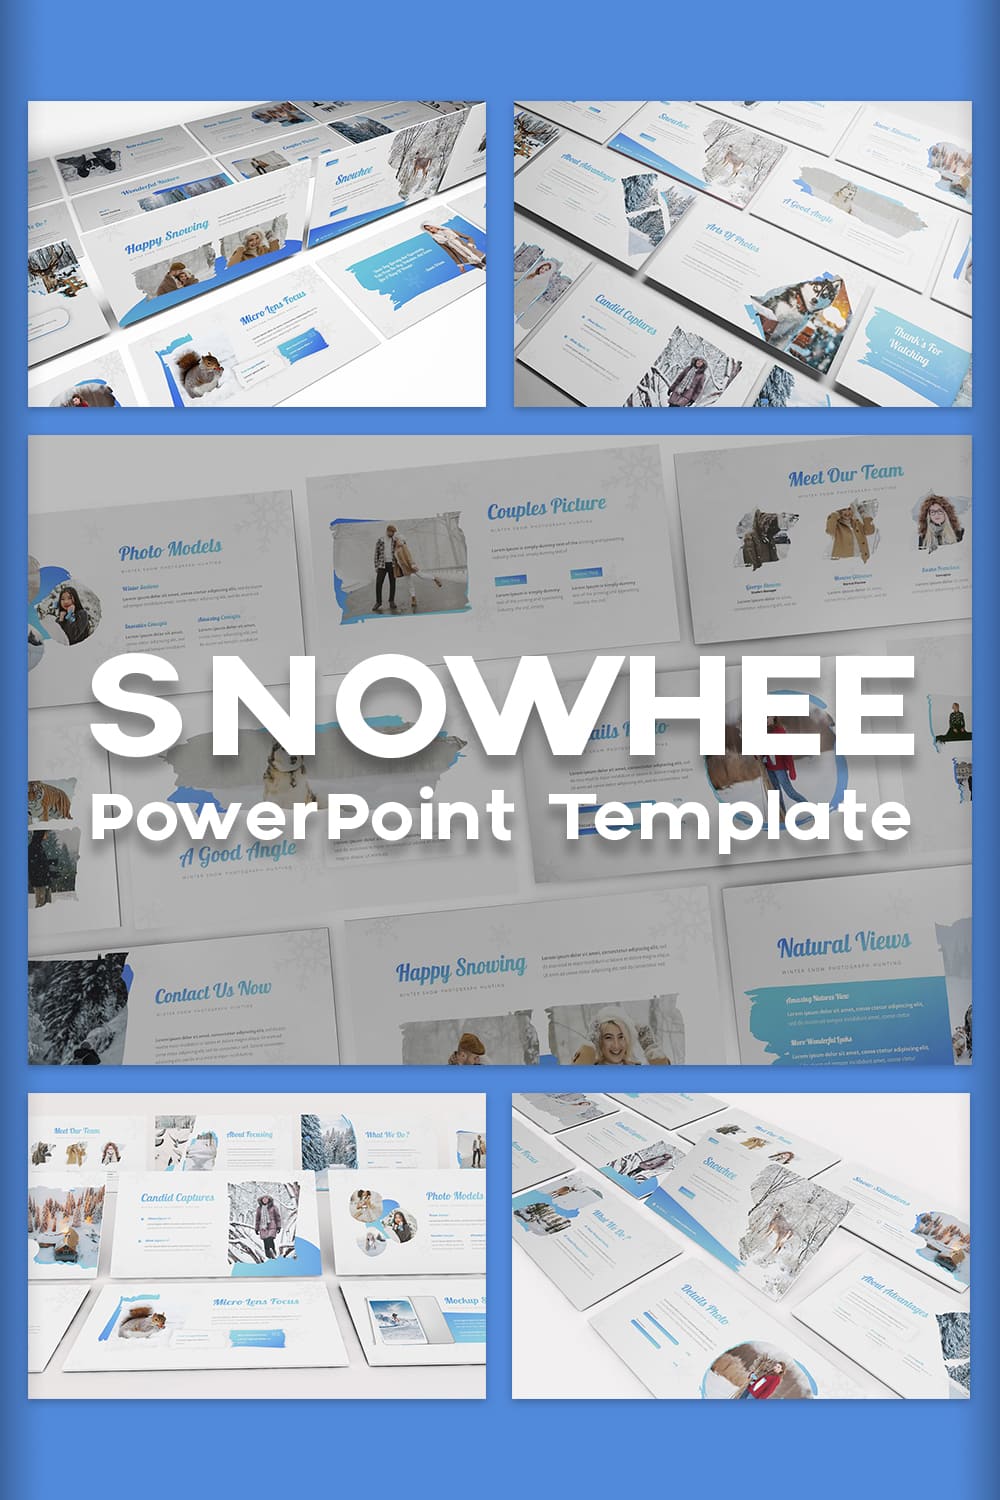 snowhee powerpoint template pinterest image.